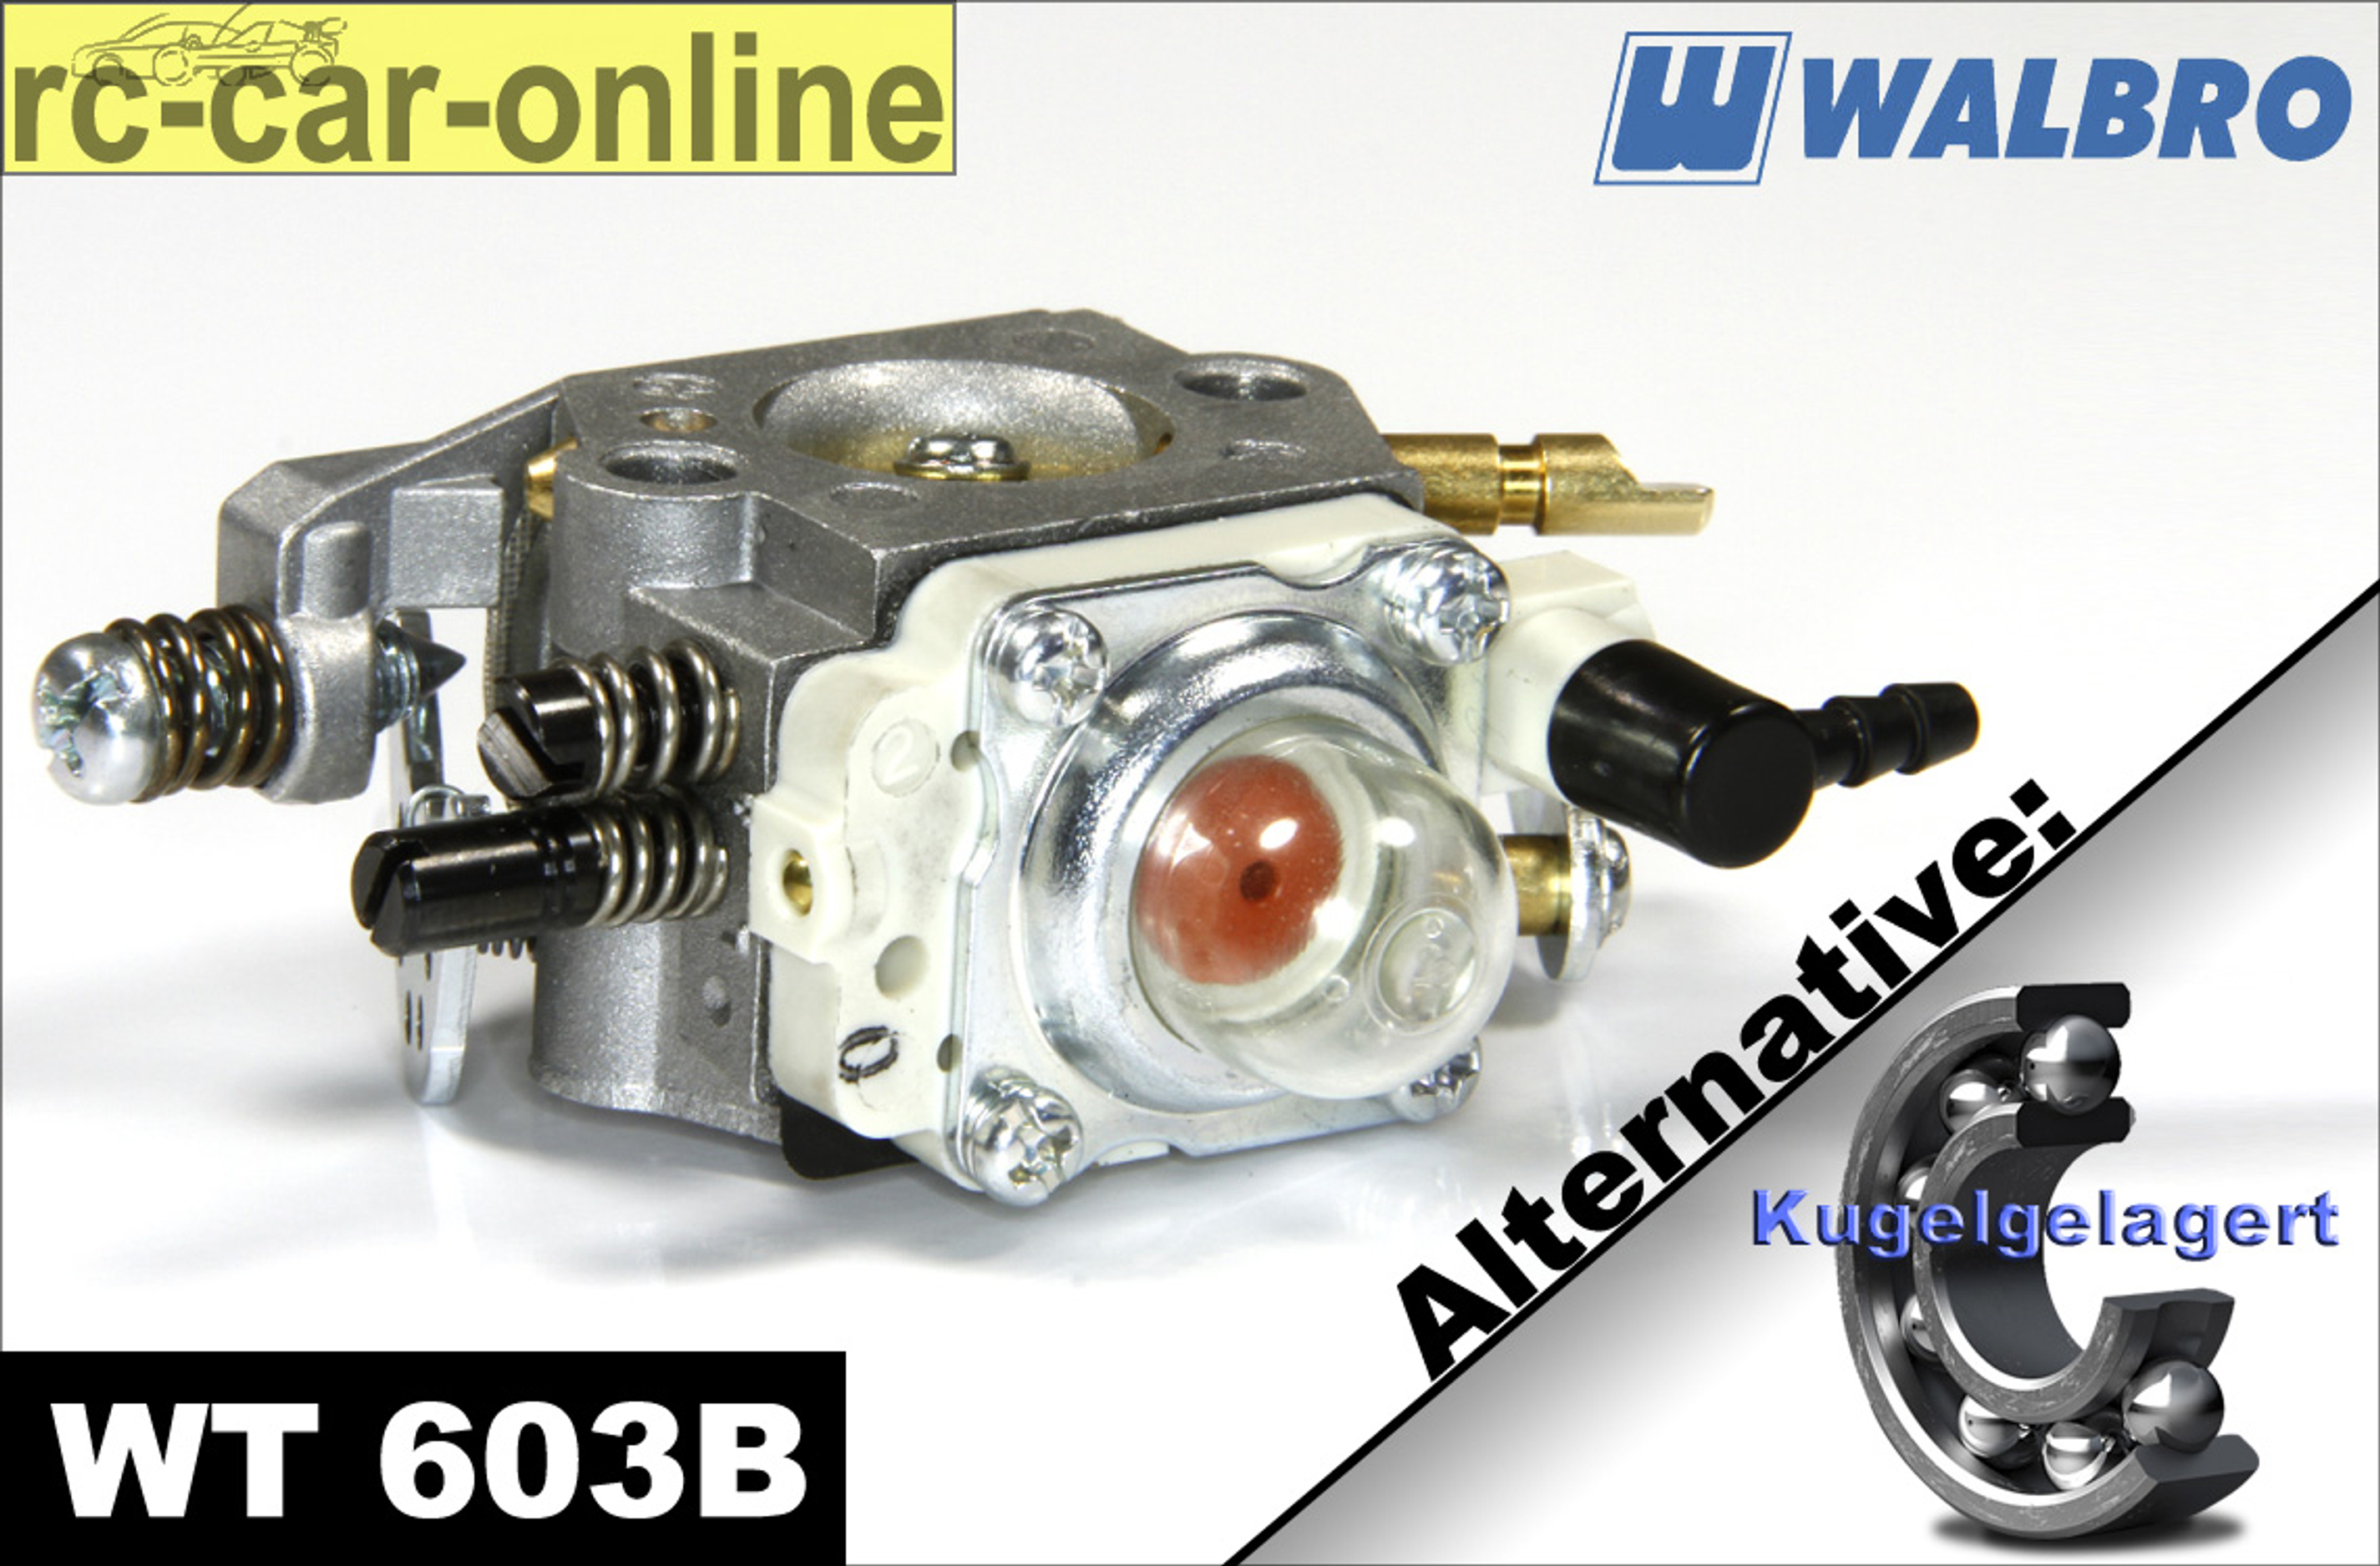 Walbro Vergaser WT 603B mit Choke normal/kugelgelagert